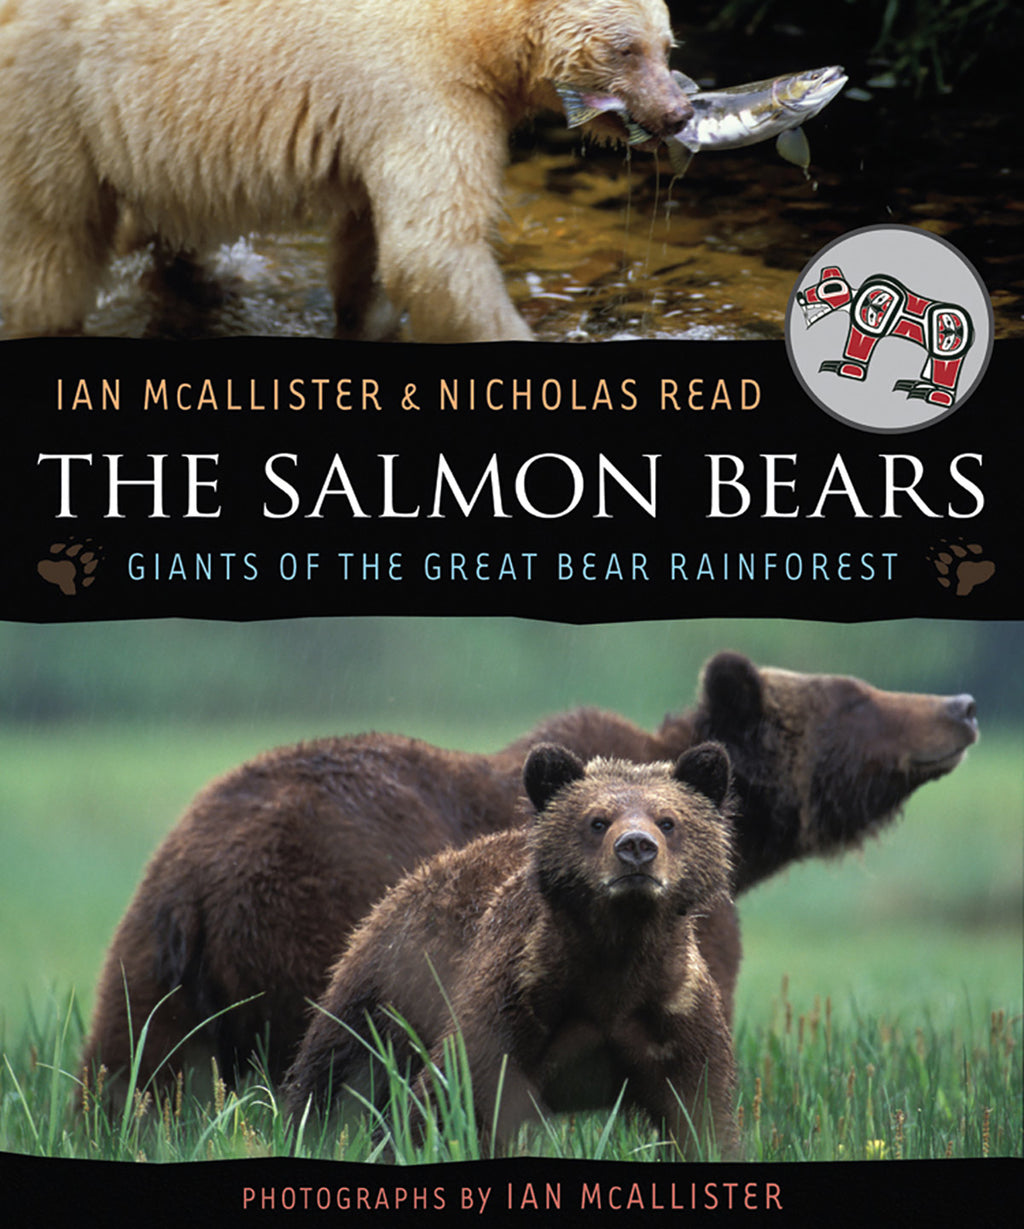 The Salmon Bears by Ian McAllister and Nicholas Read